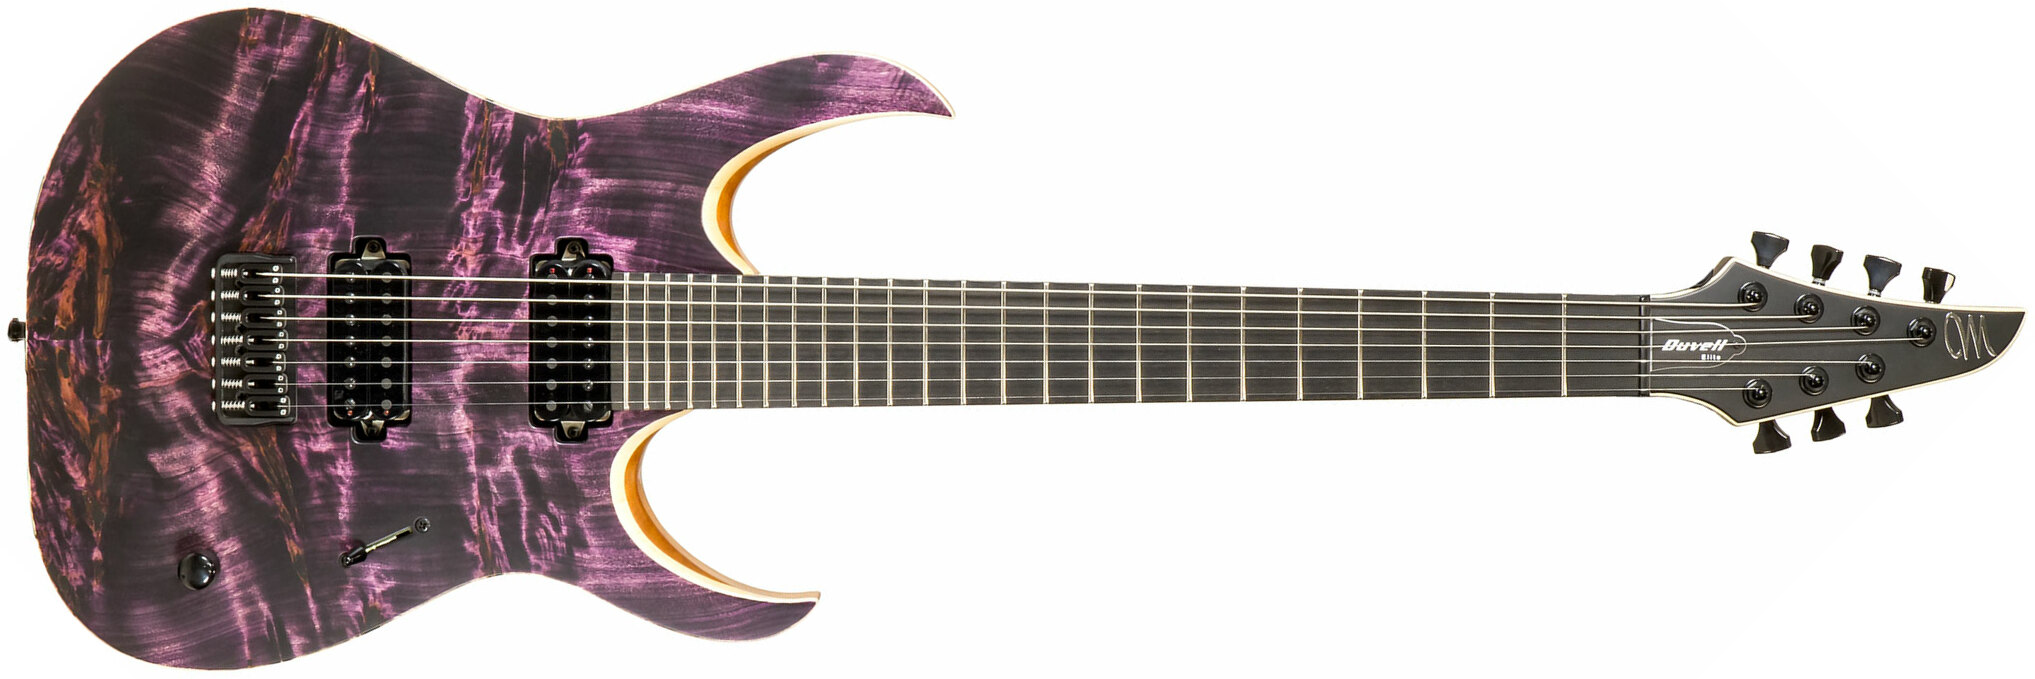 Mayones Guitars Duvell Elite 7c 2h Seymour Duncan Ht Eb #df2009194 - Dirty Purple - 7-saitige E-Gitarre - Main picture